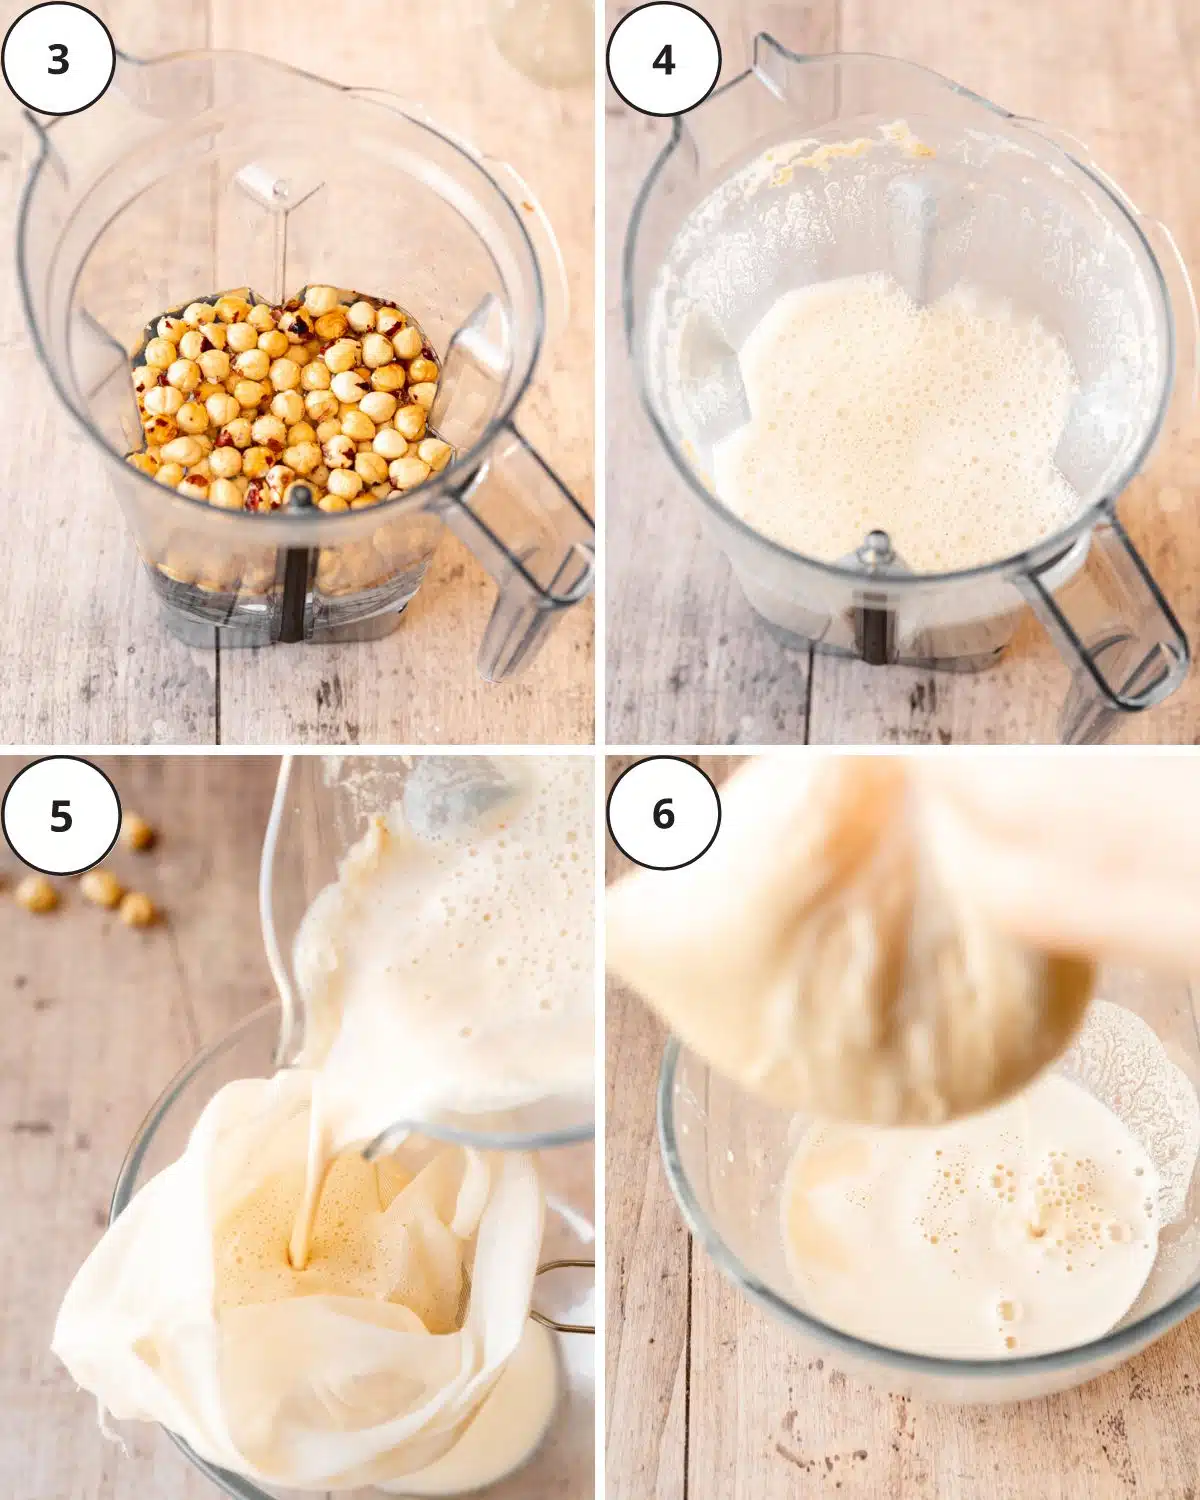 making hazelnut milk in a blender and straining it through a nut milk bag.